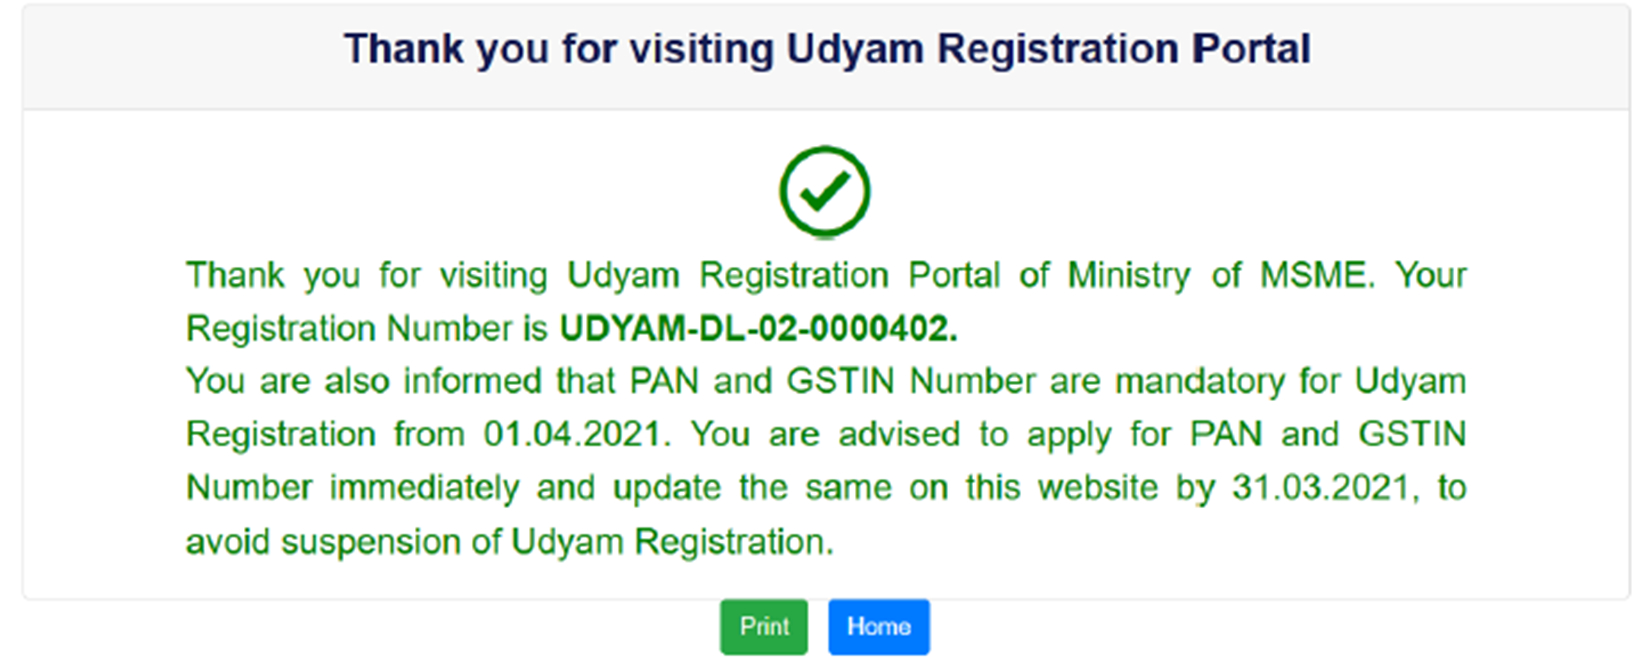 How to Register MSME on Government Portal for MSME? | Udhyam Registration